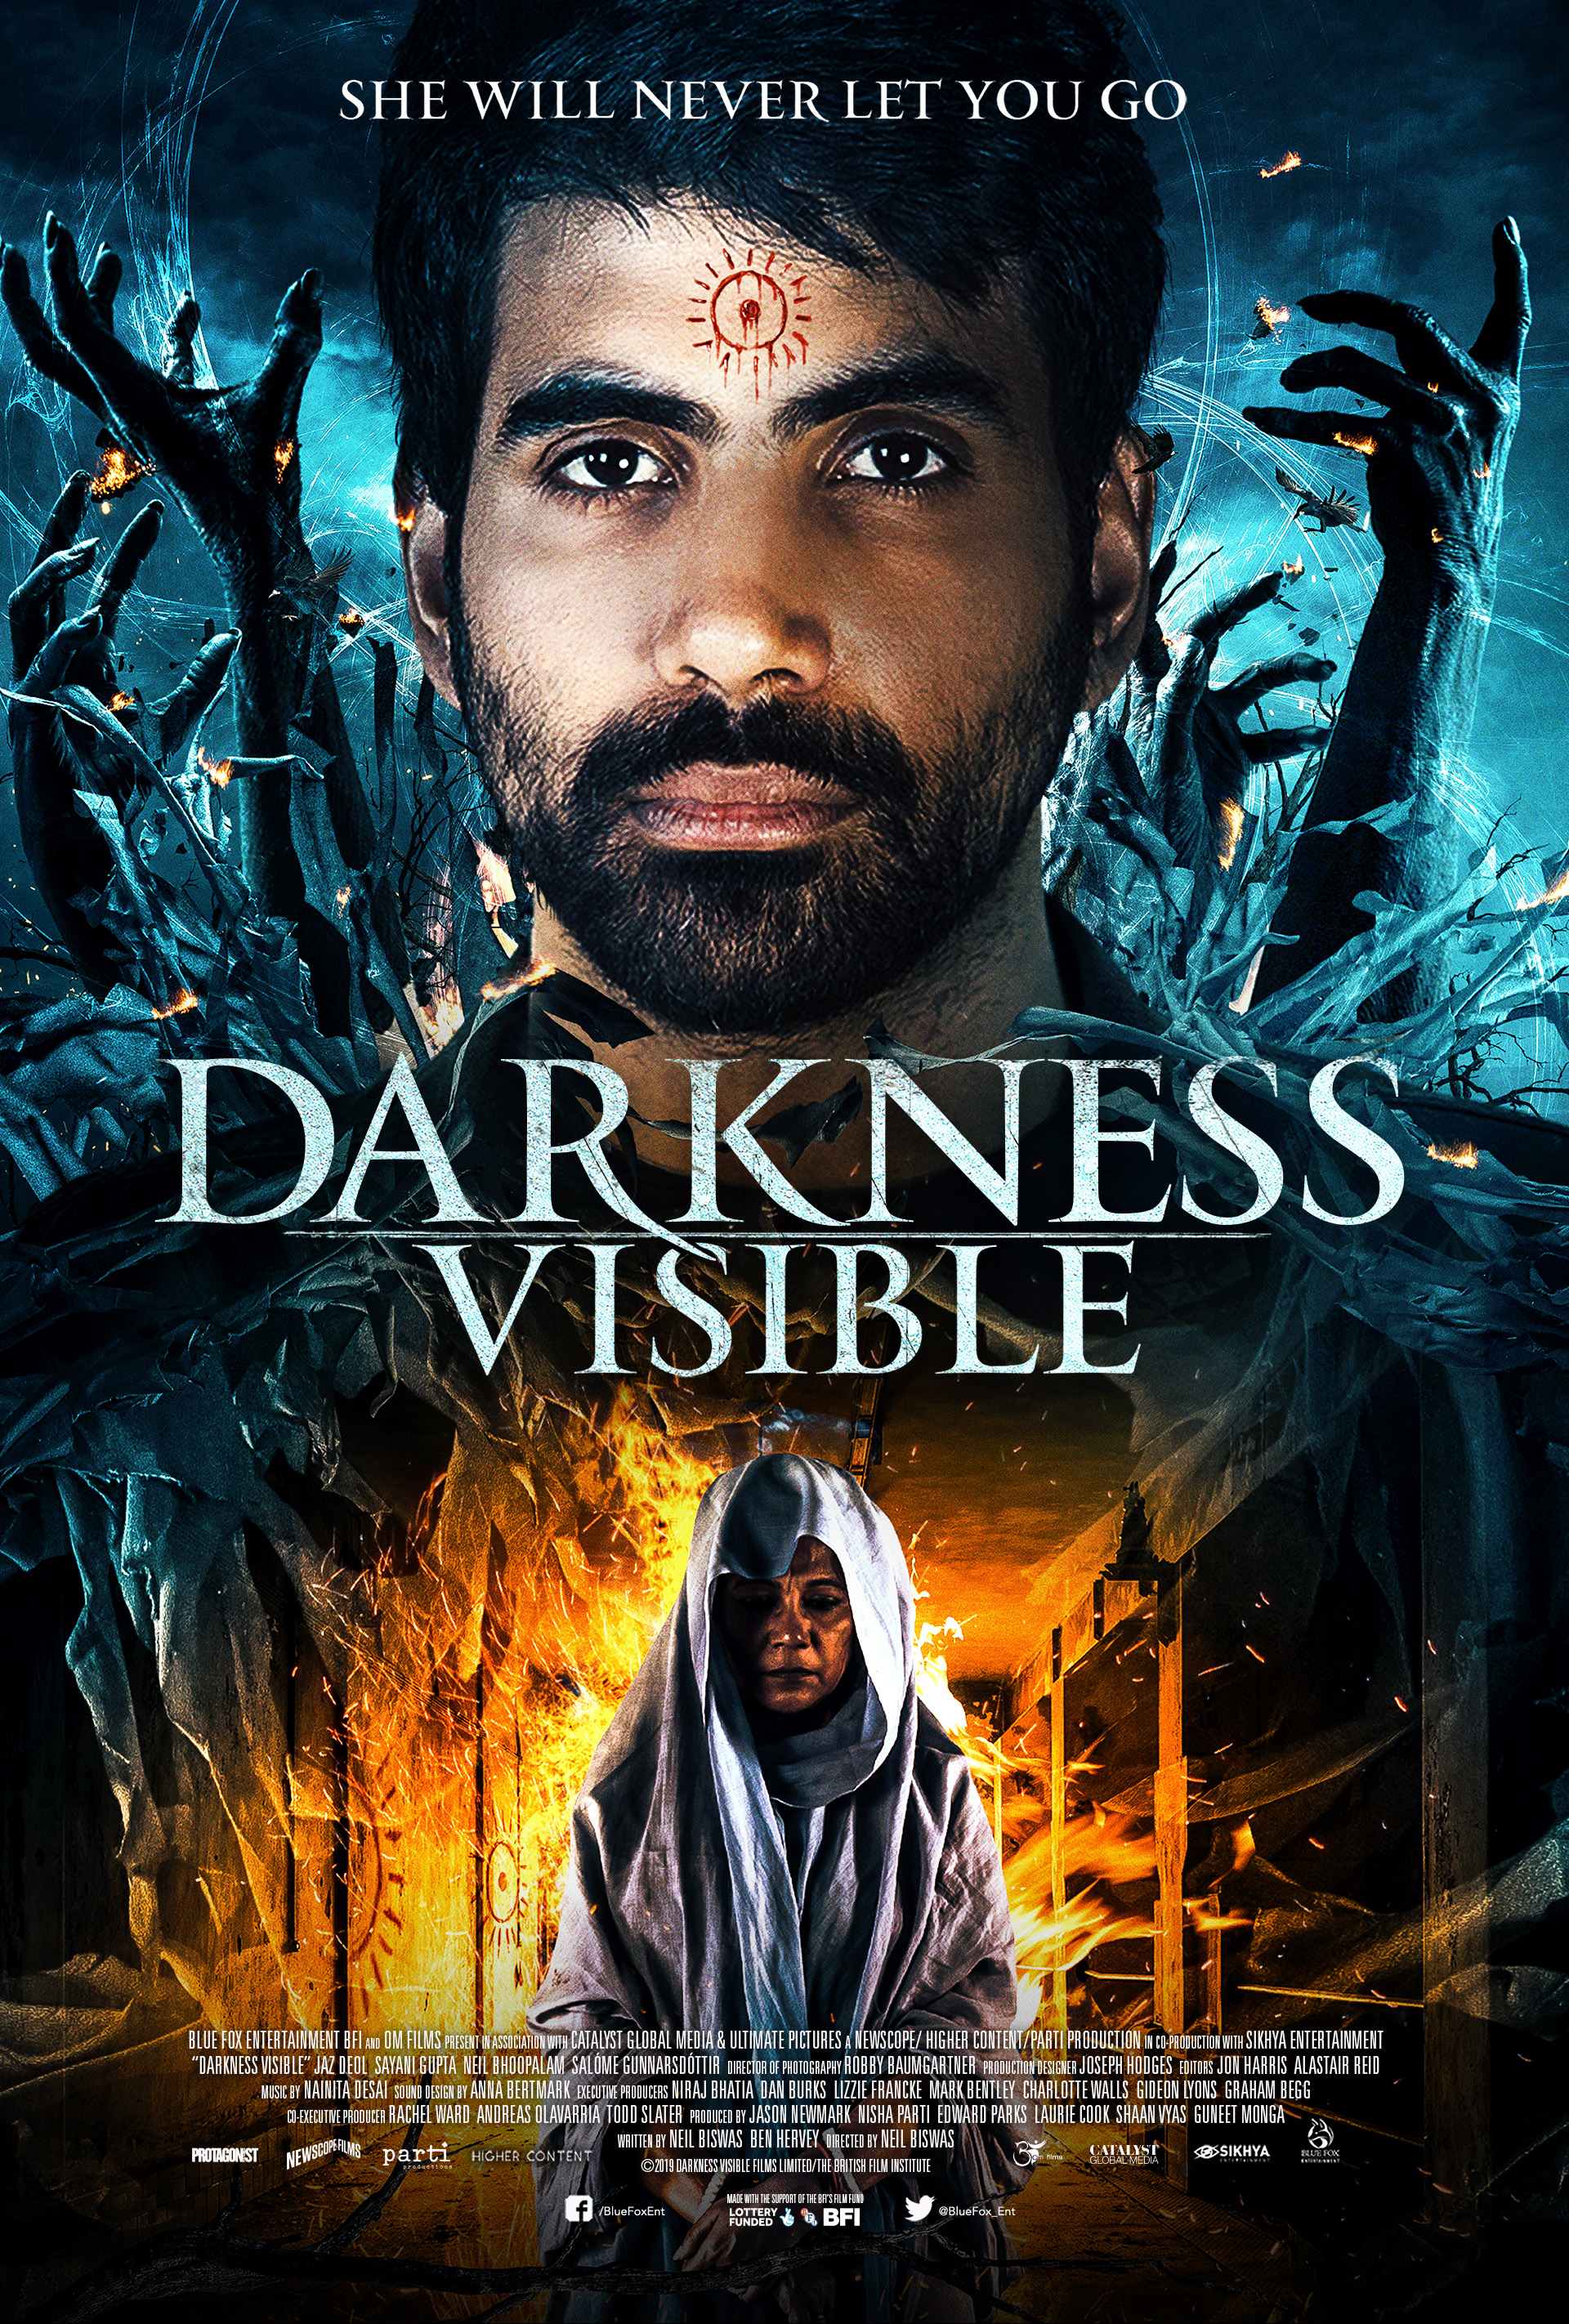 Nonton film Darkness Visible layarkaca21 indoxx1 ganool online streaming terbaru